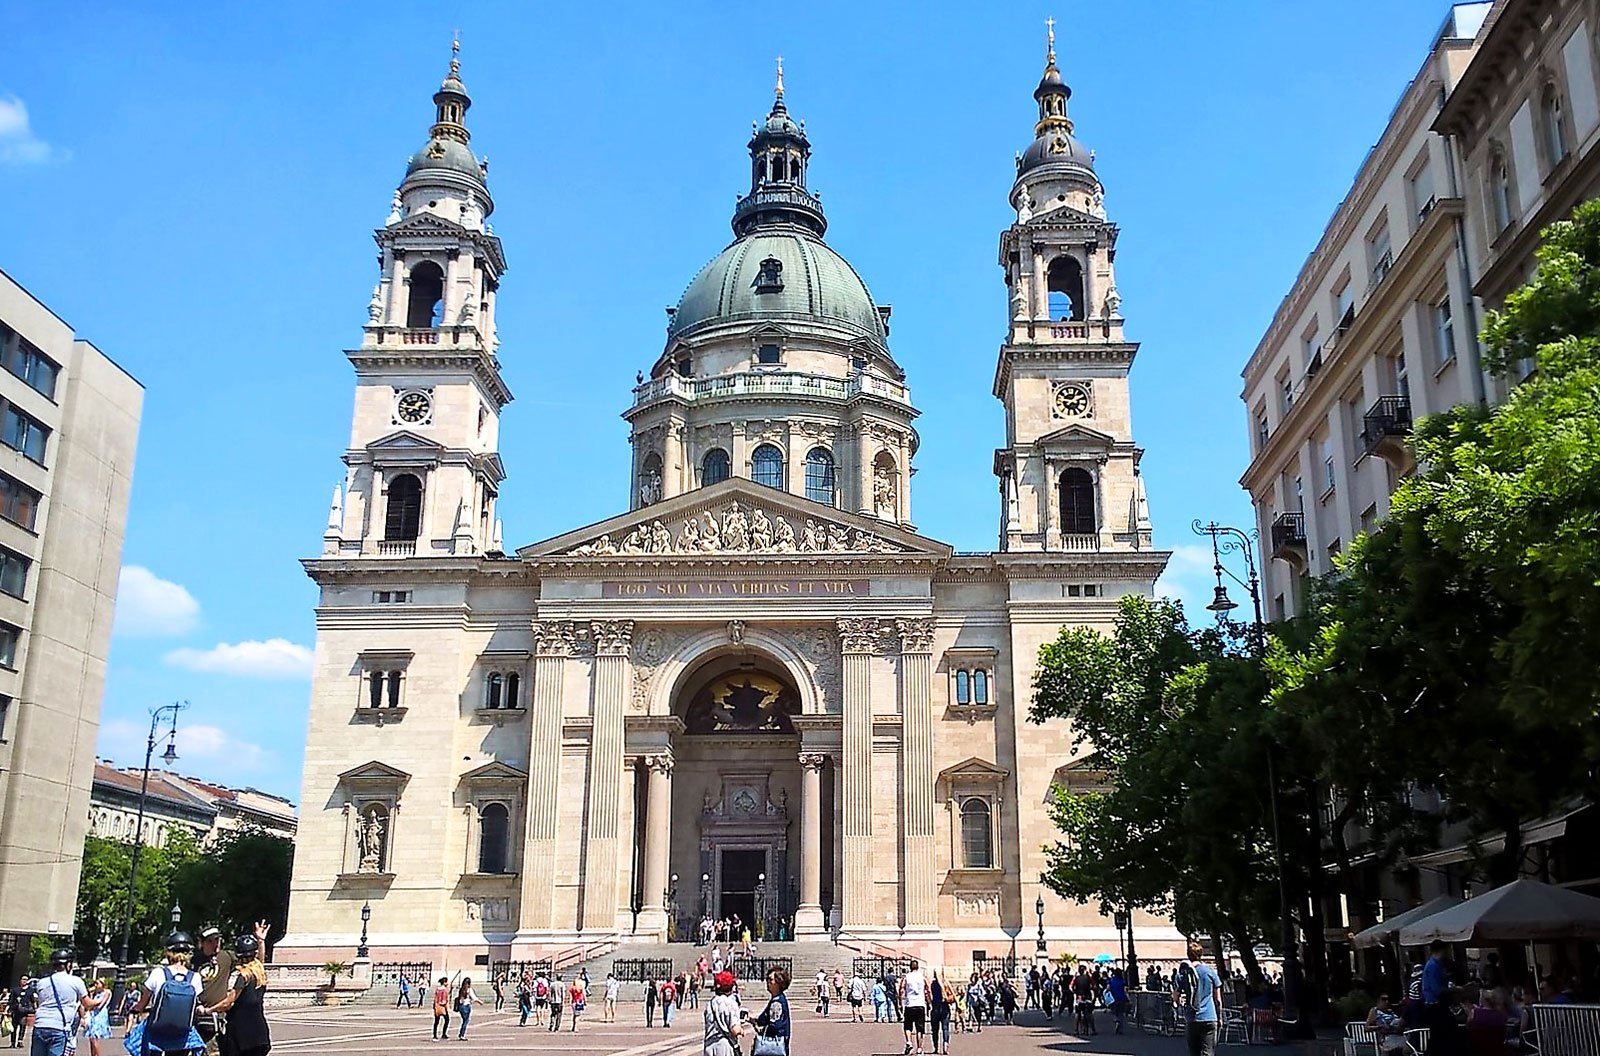 St.Stephen's Basilica, Budapest